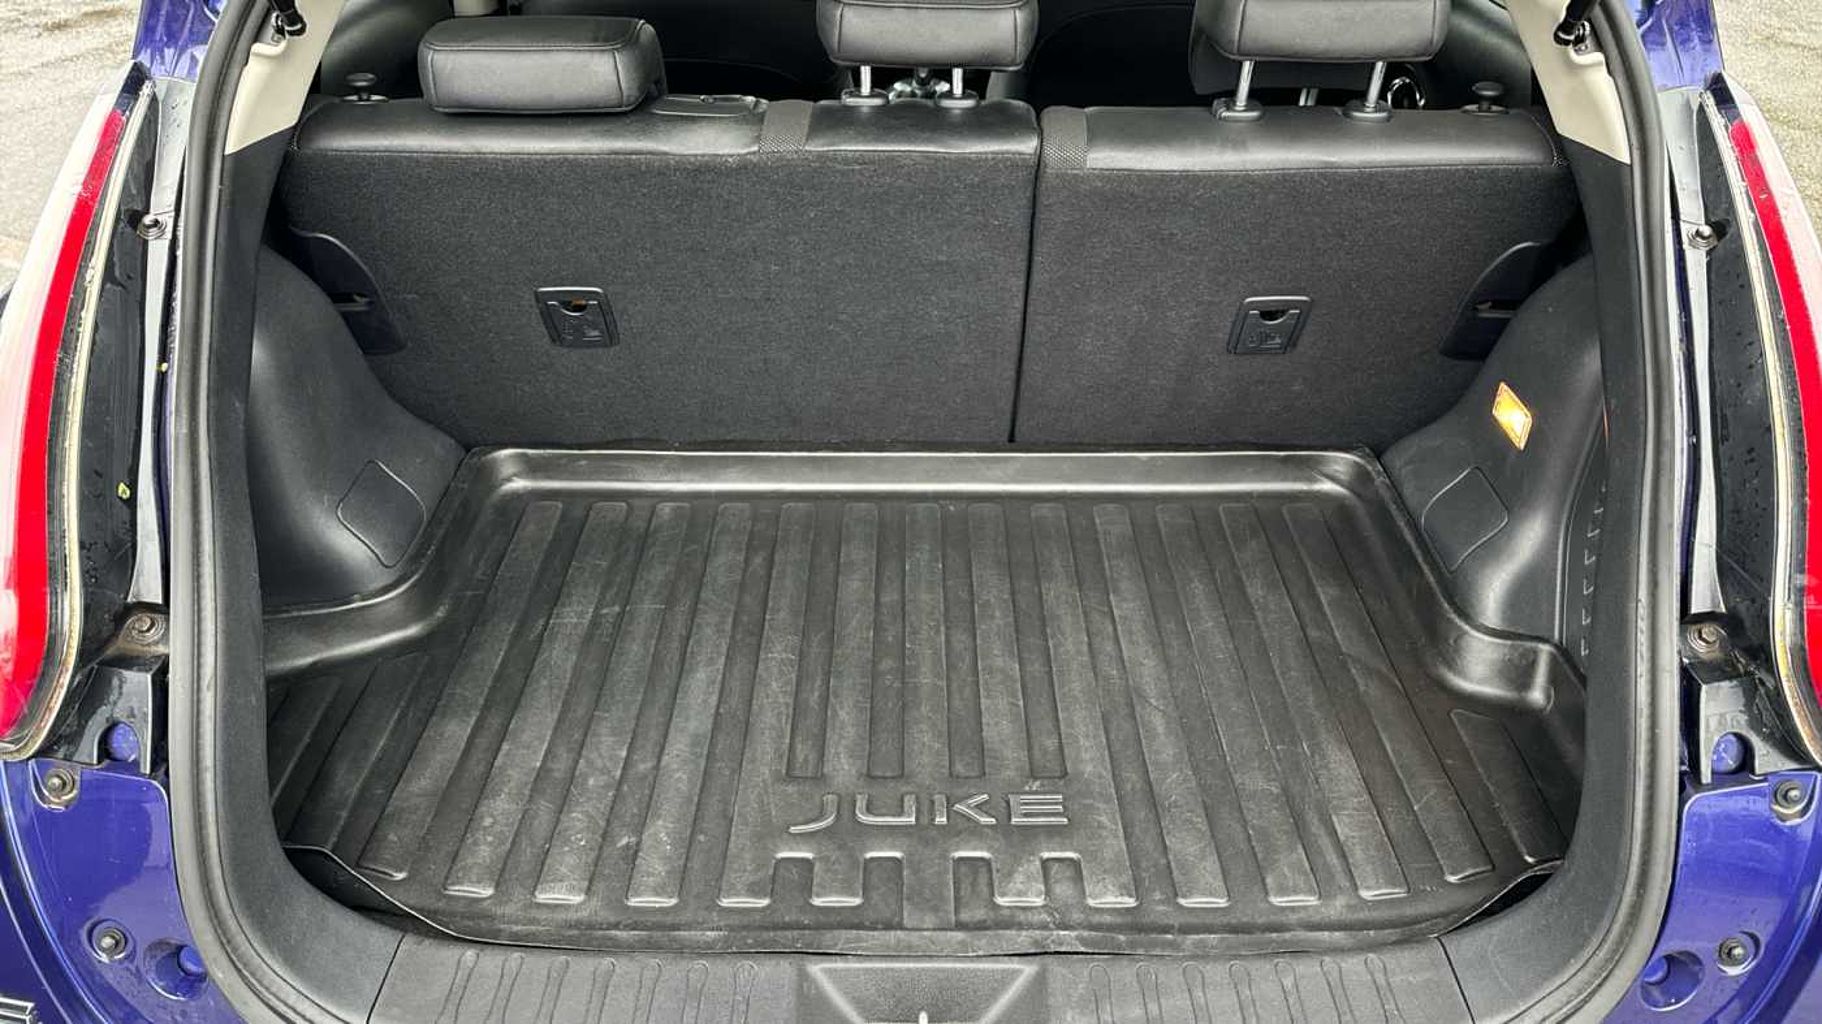 Nissan Juke 1.6 Bose Personal Edition 5-Door Hatchback